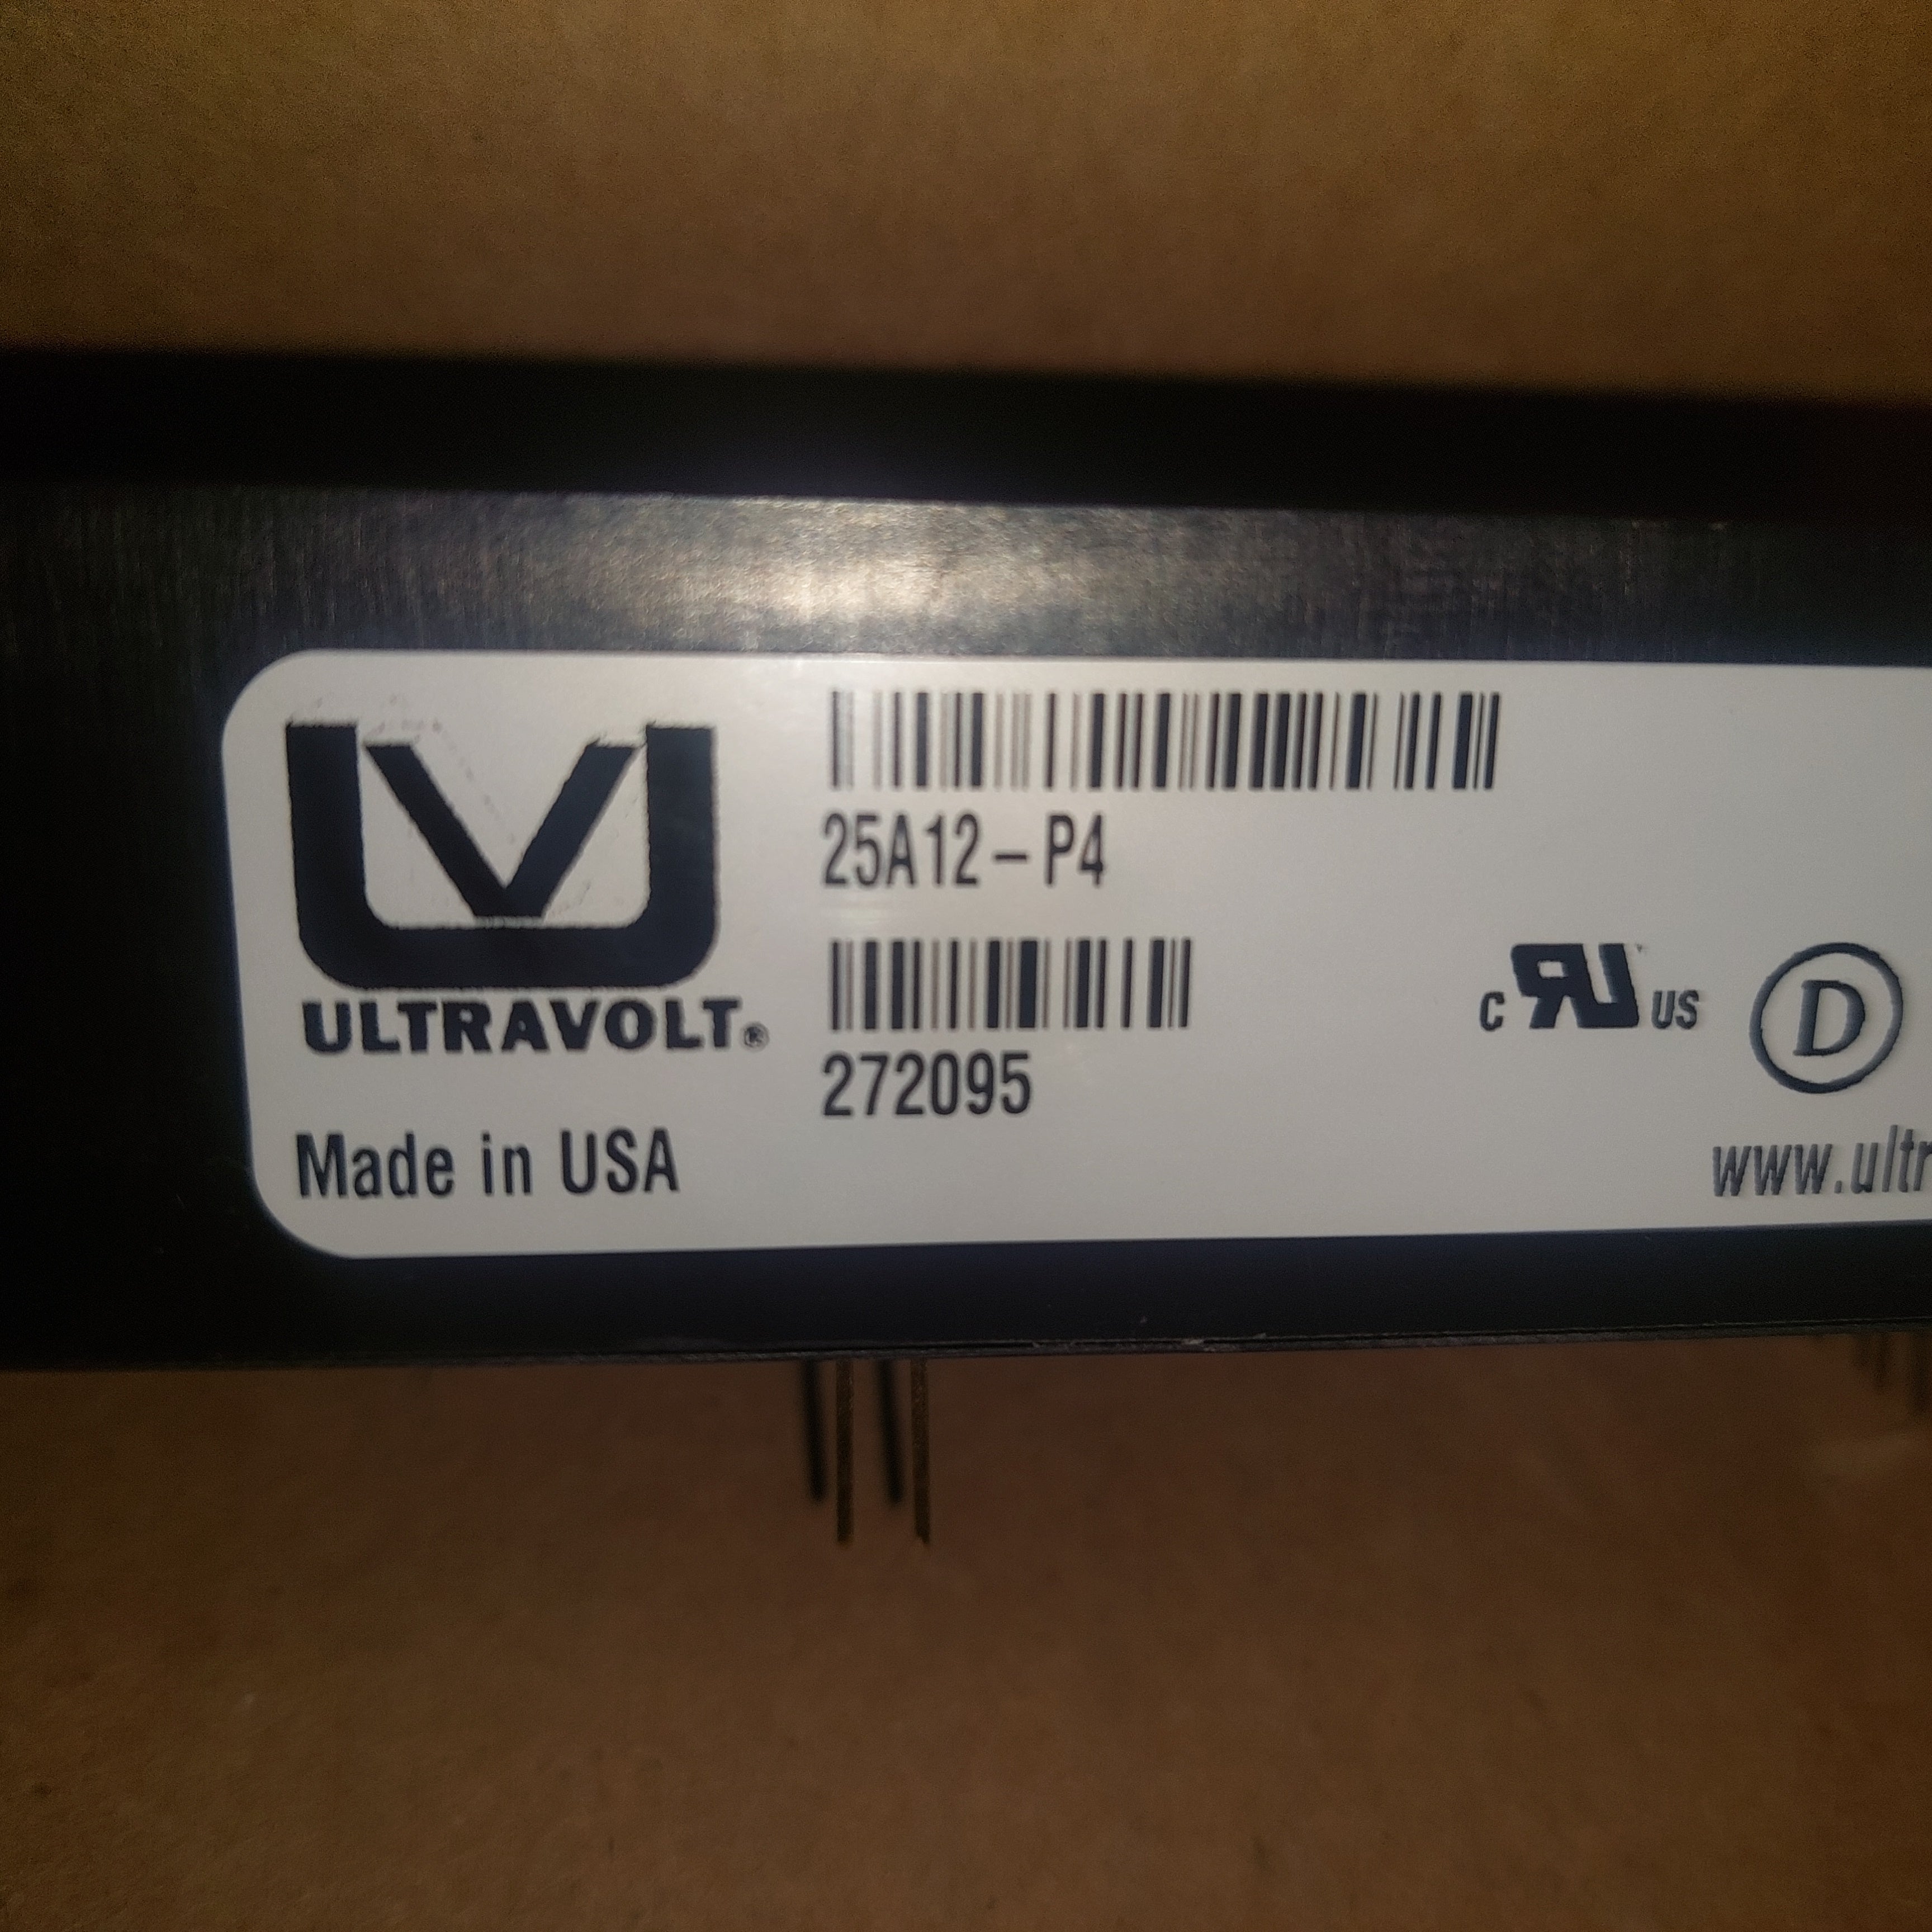 Ultravolt 25A12-P4 DC to DC Convertor 12V Input 25kV Output Used